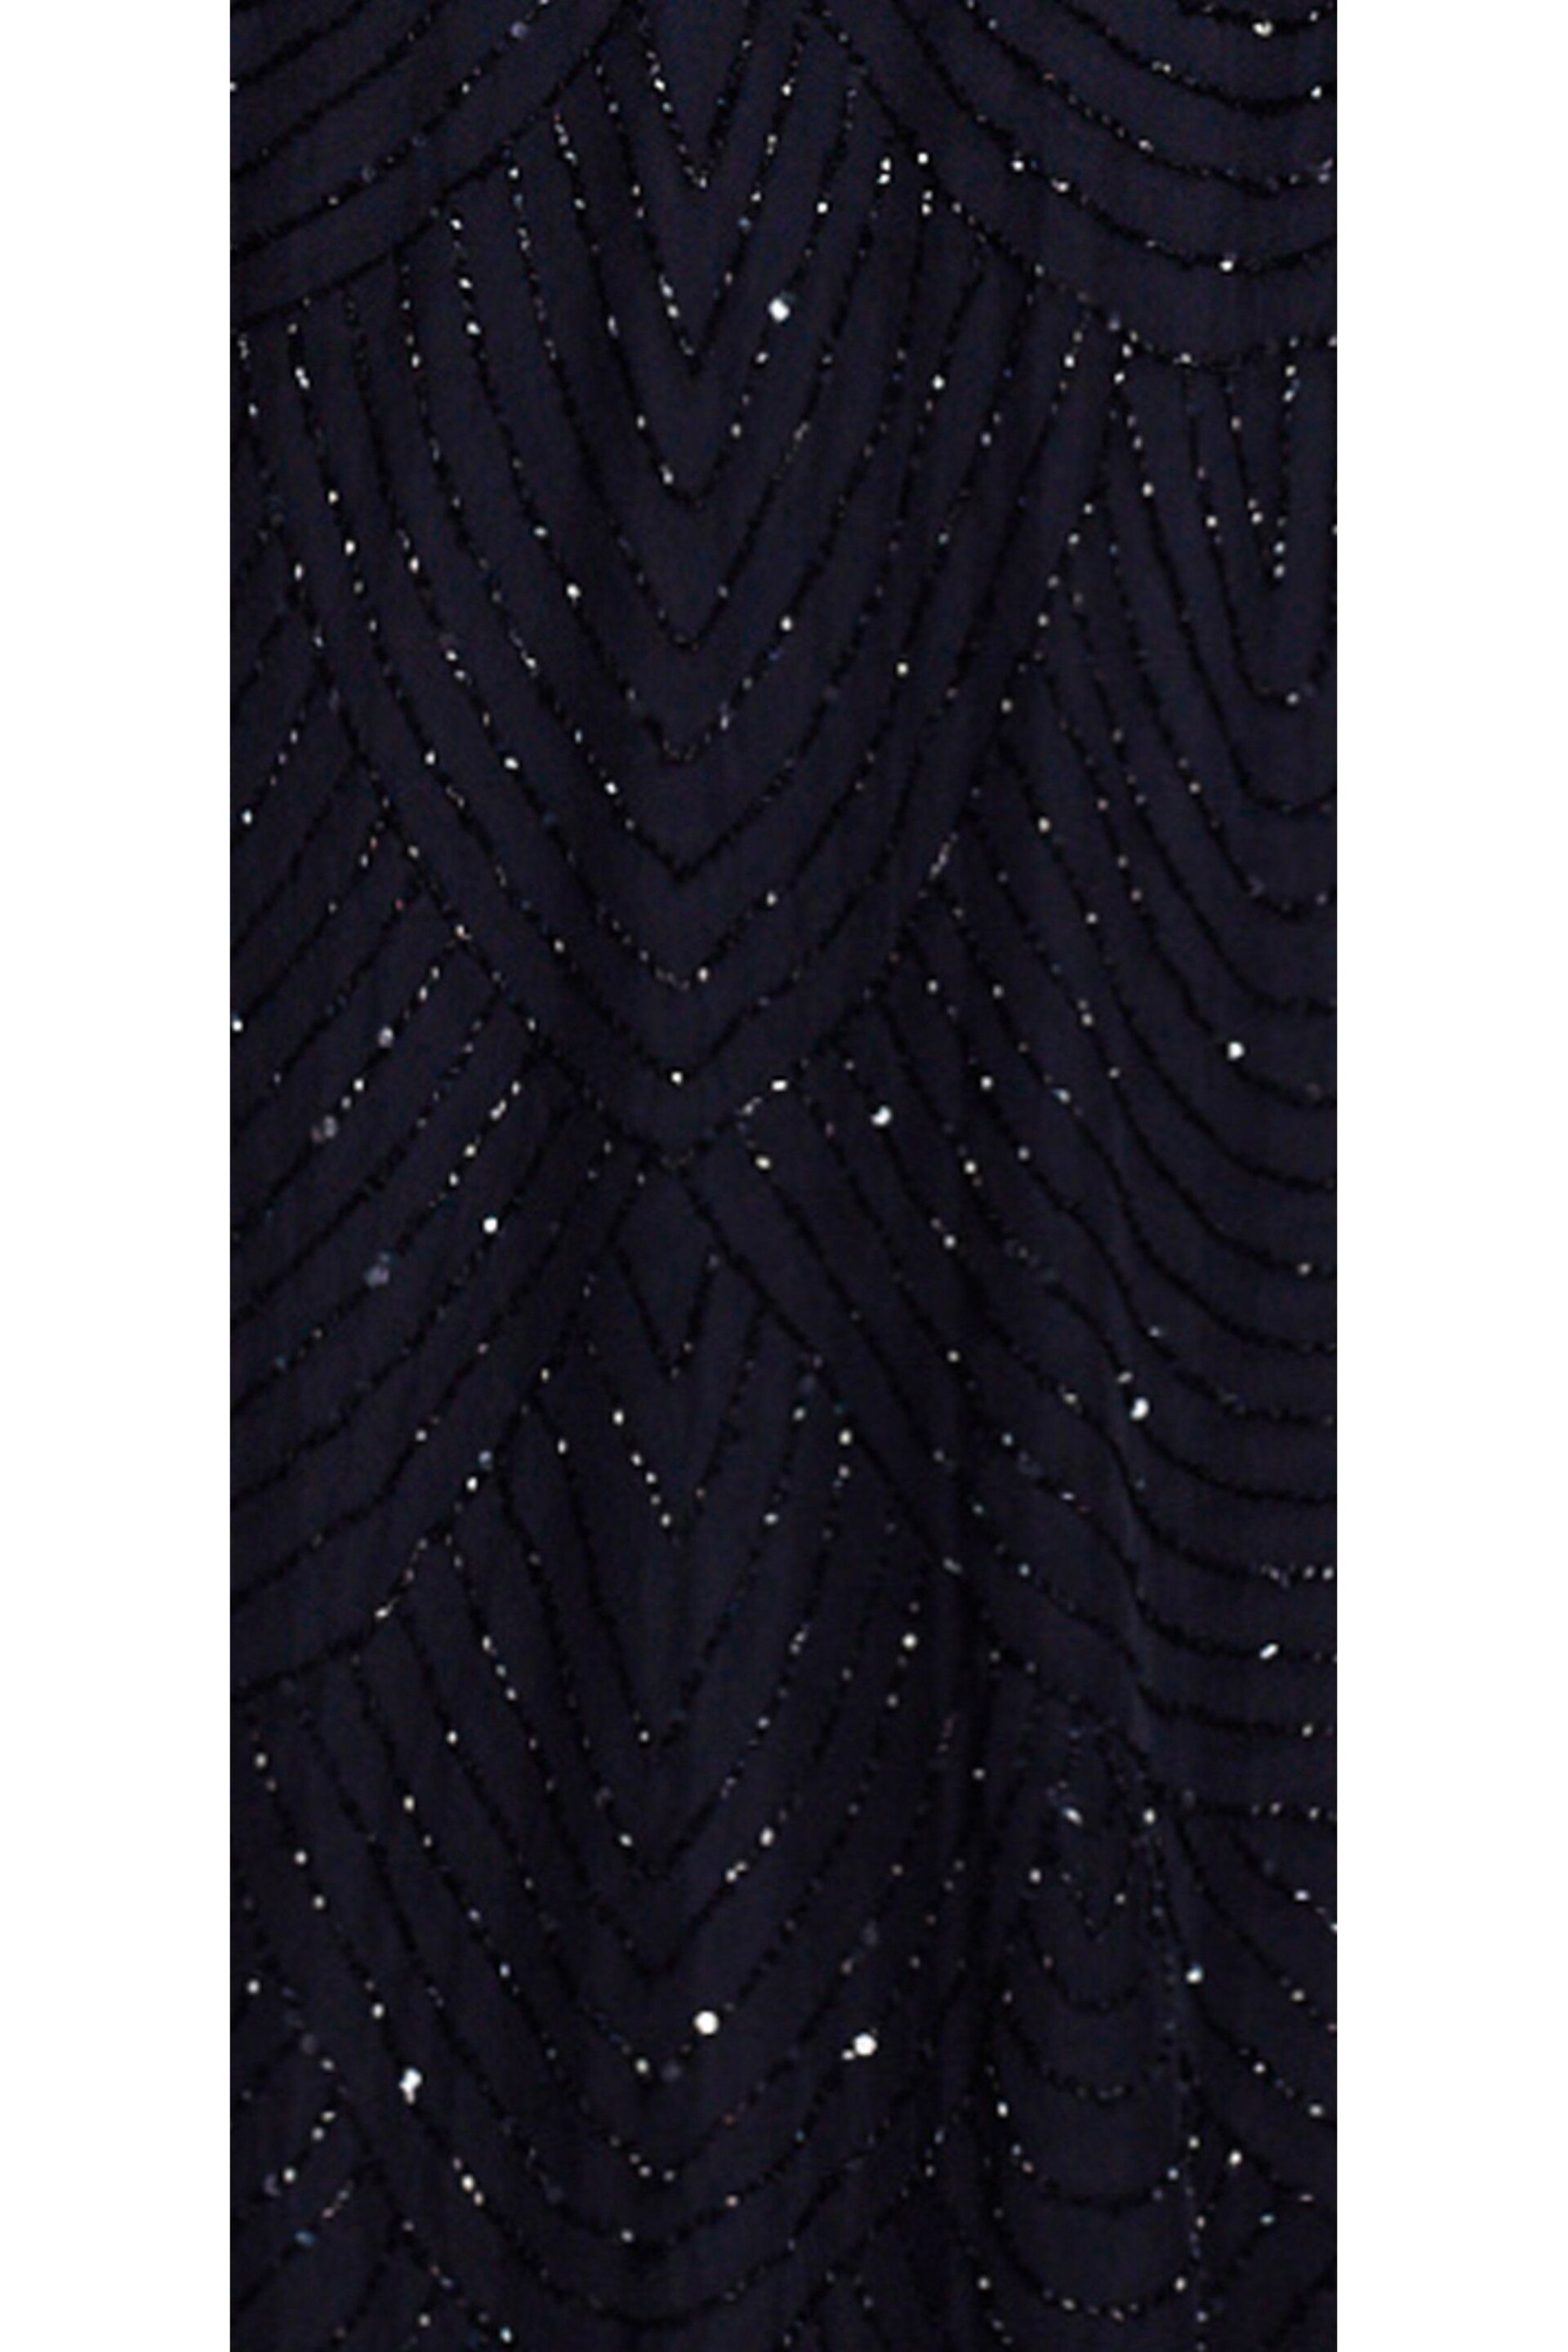 Adrianna Papell Black Blouson Beaded Dress - Image 5 of 5